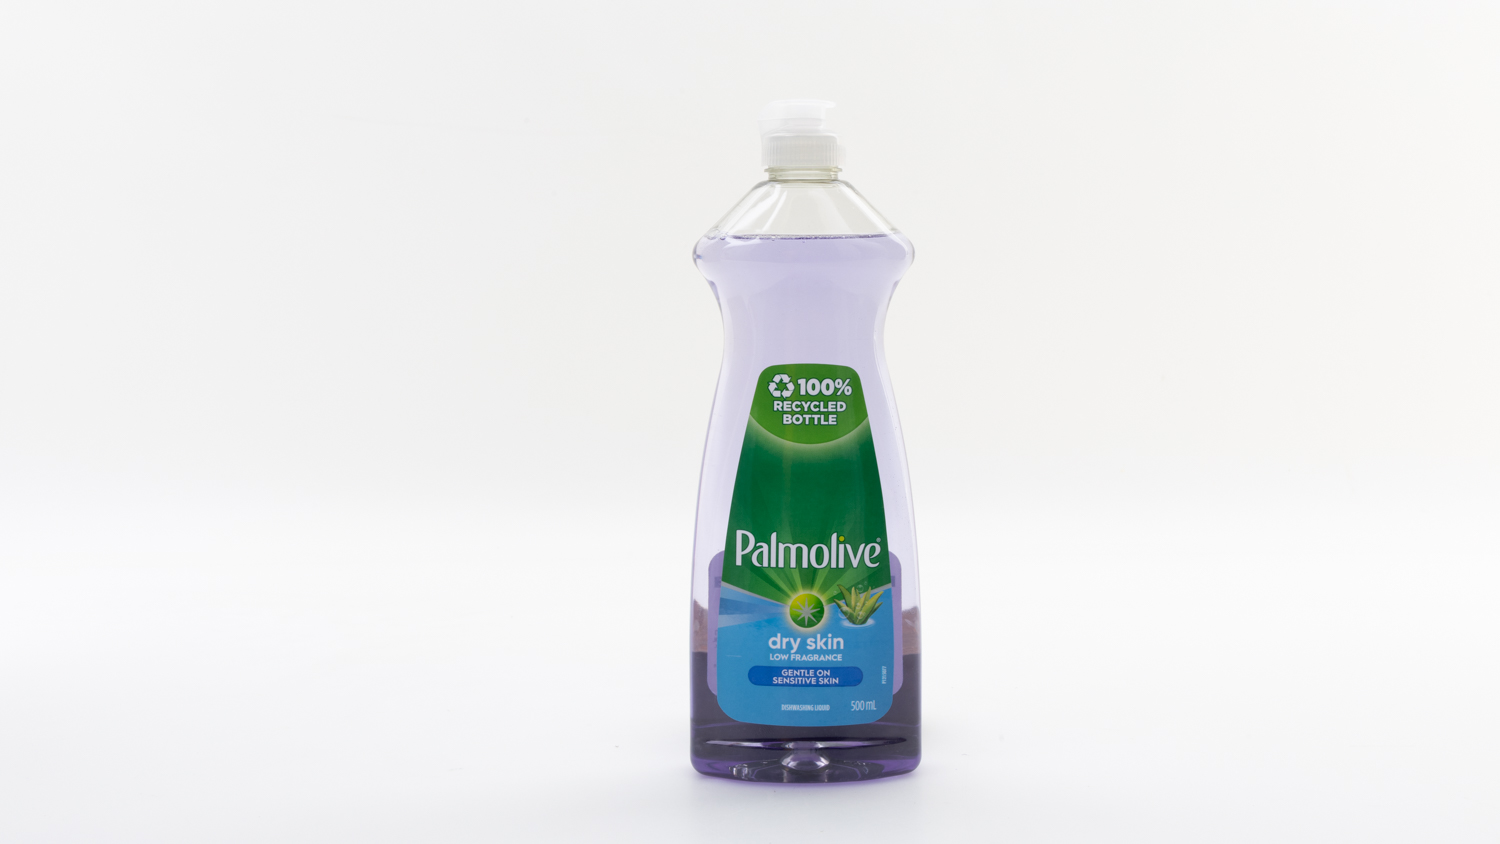 Palmolive Dry Skin Low Fragrance Dishwashing Liquid carousel image